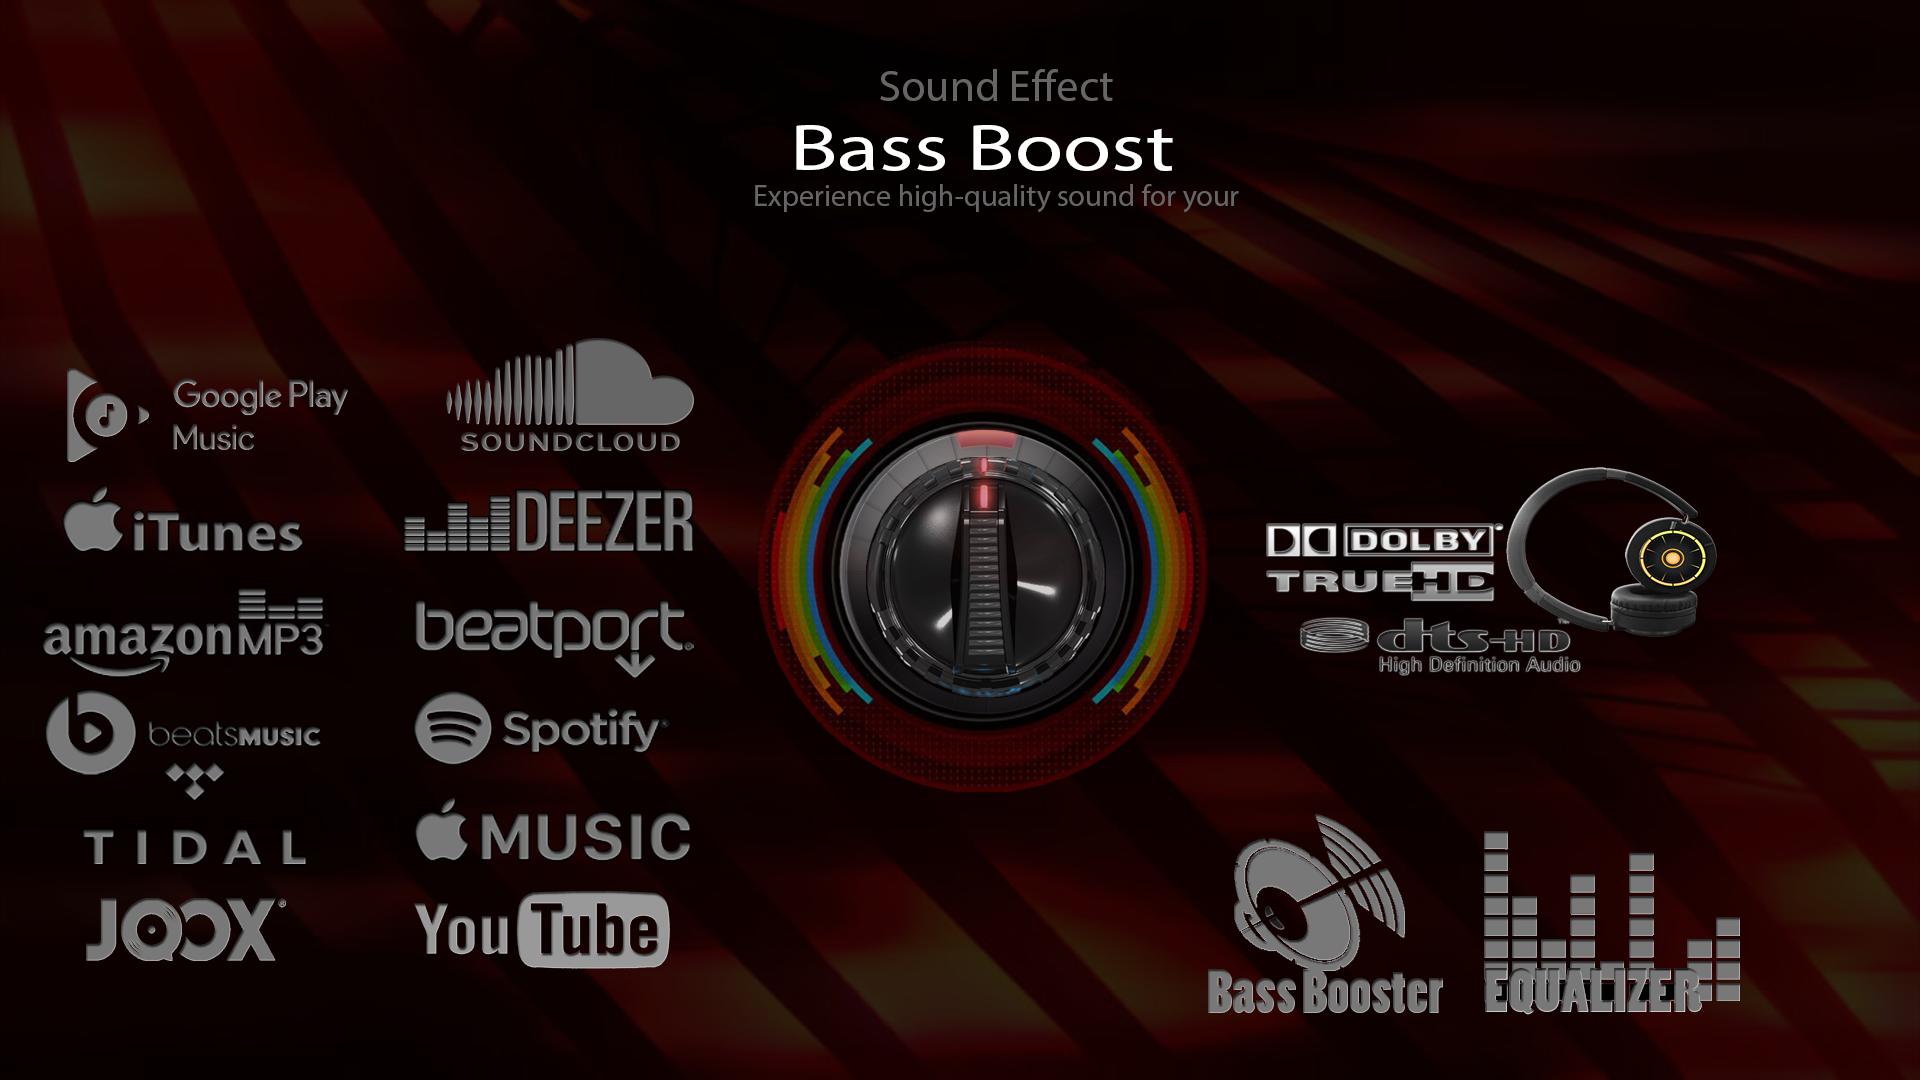 Bass Booster. Bass Boost EQ. Бас буст виндовс 7. EQ Boost басс. Звук басс буста